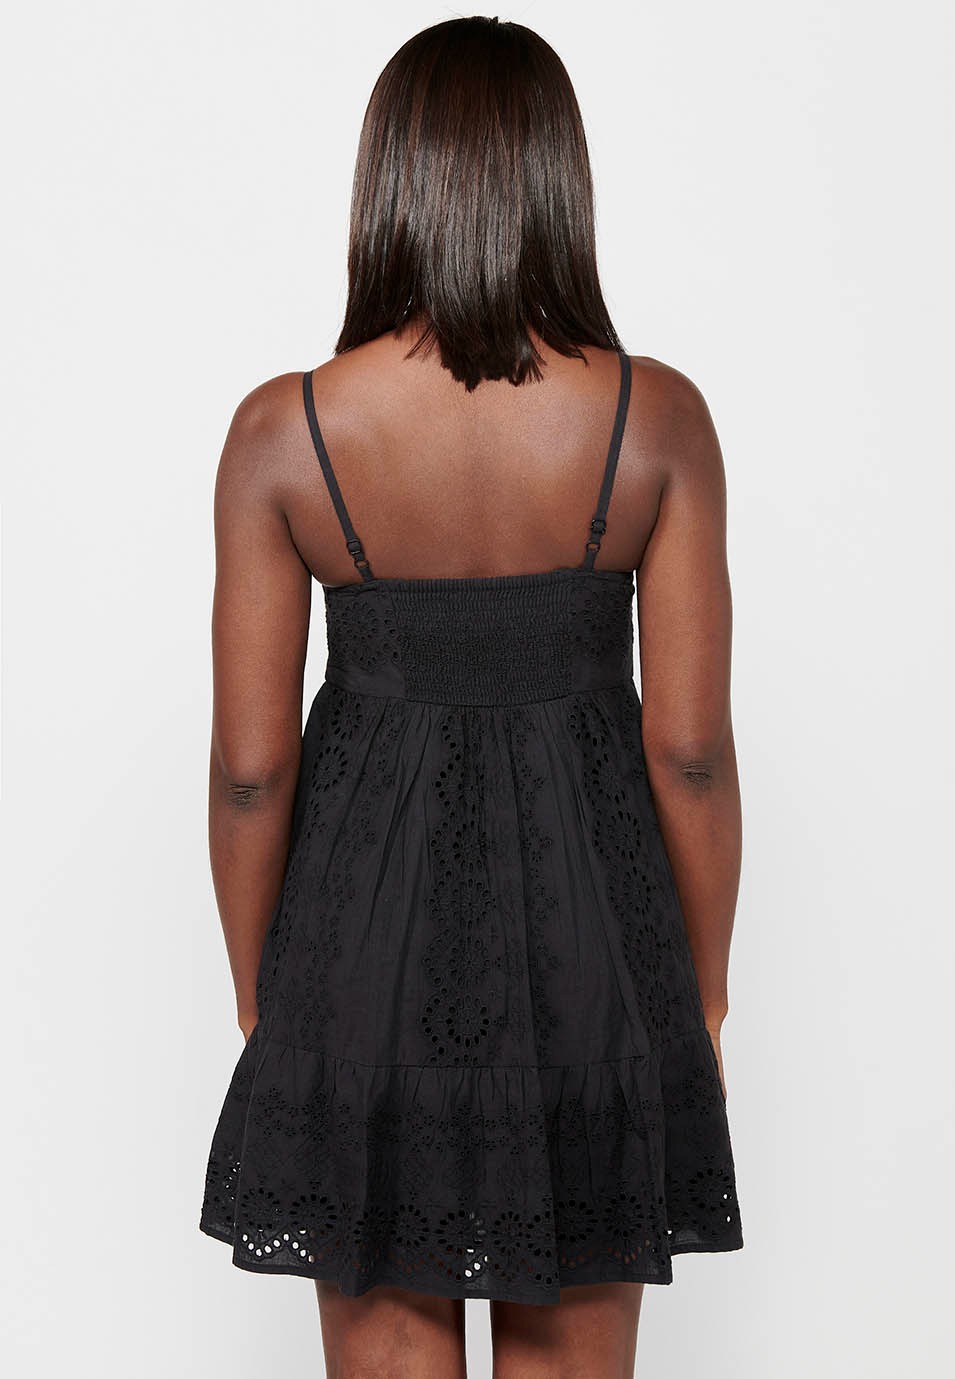 Strap dress, V-neck, embroidered fabric, Black color for women